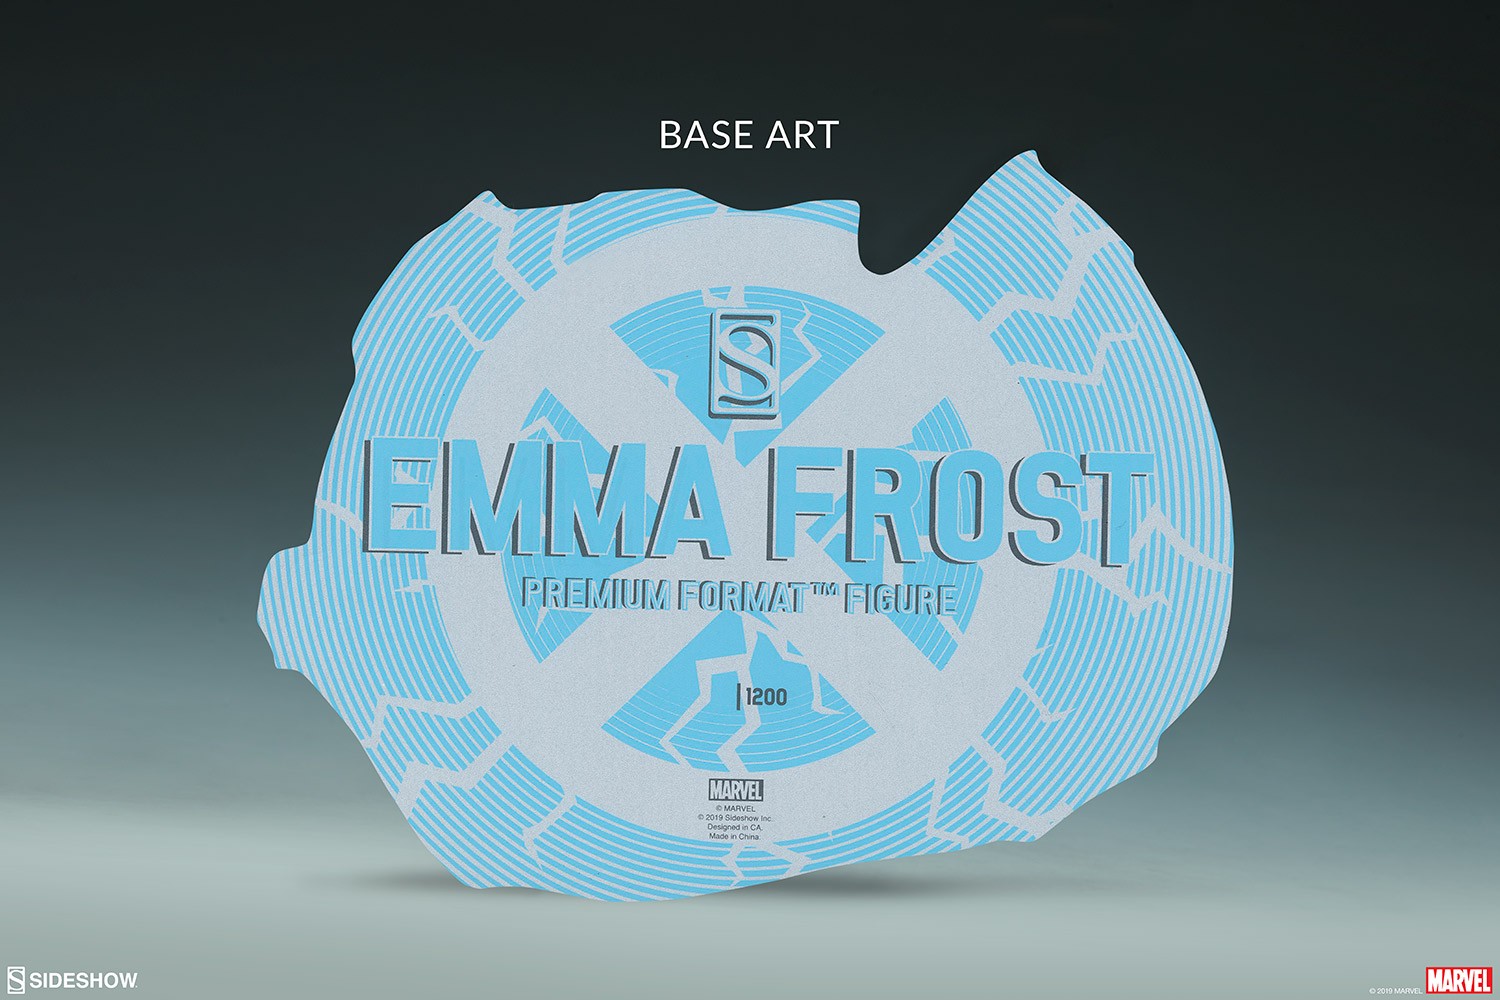 Emma Frost